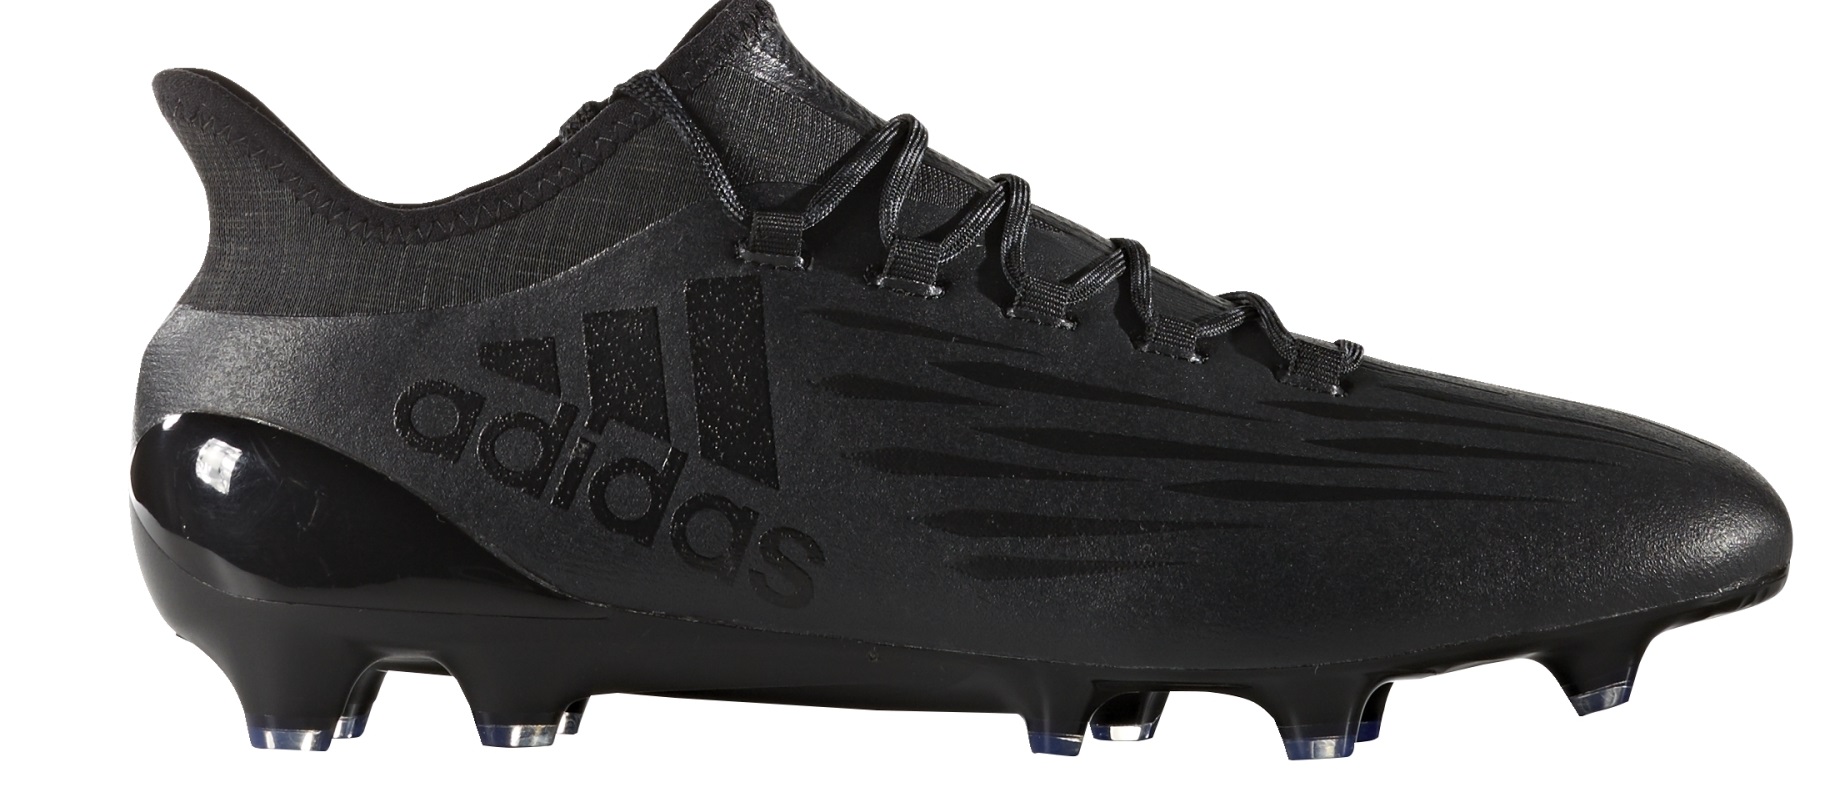 Football boots Adidas X 16.1 FG colore Black - Adidas - SportIT.com